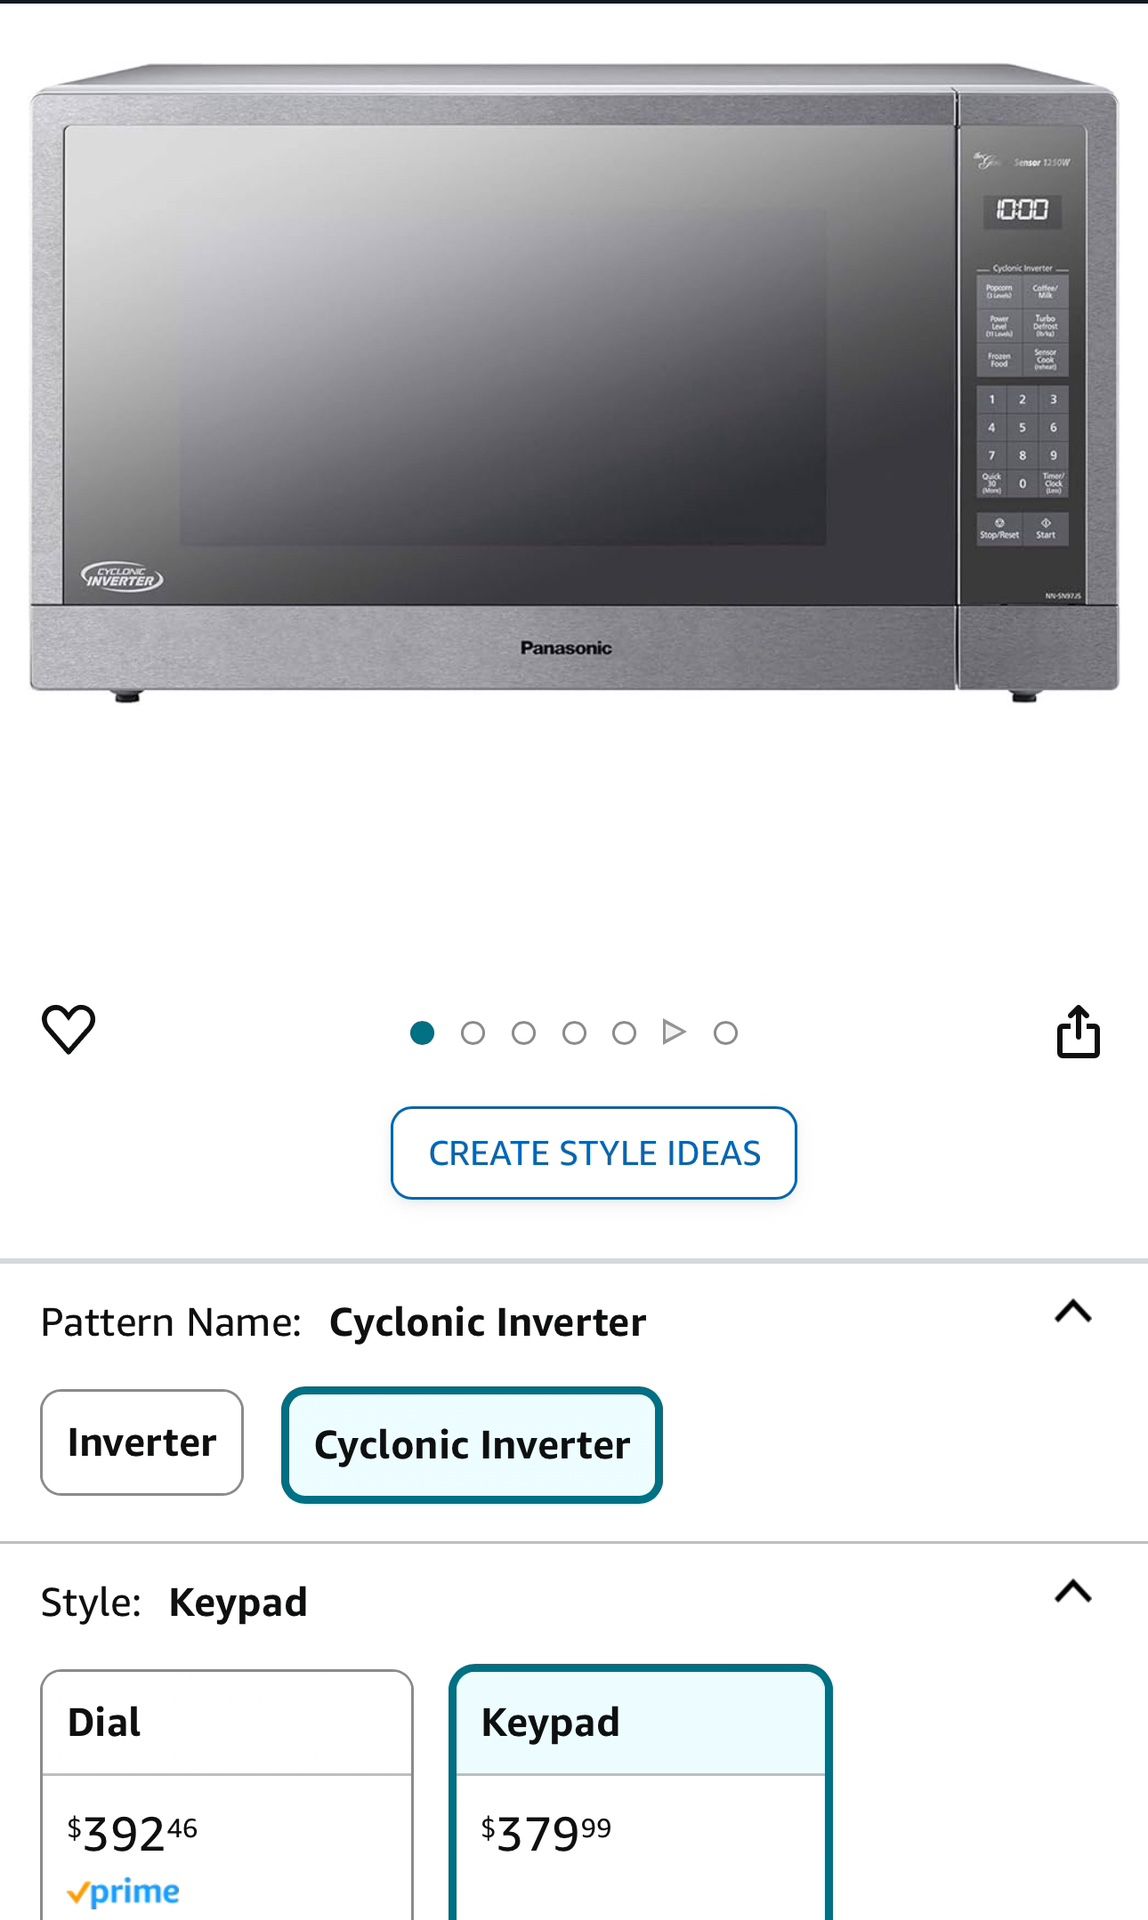 Panasonic Cyclonic Inverter Digital Microwave 